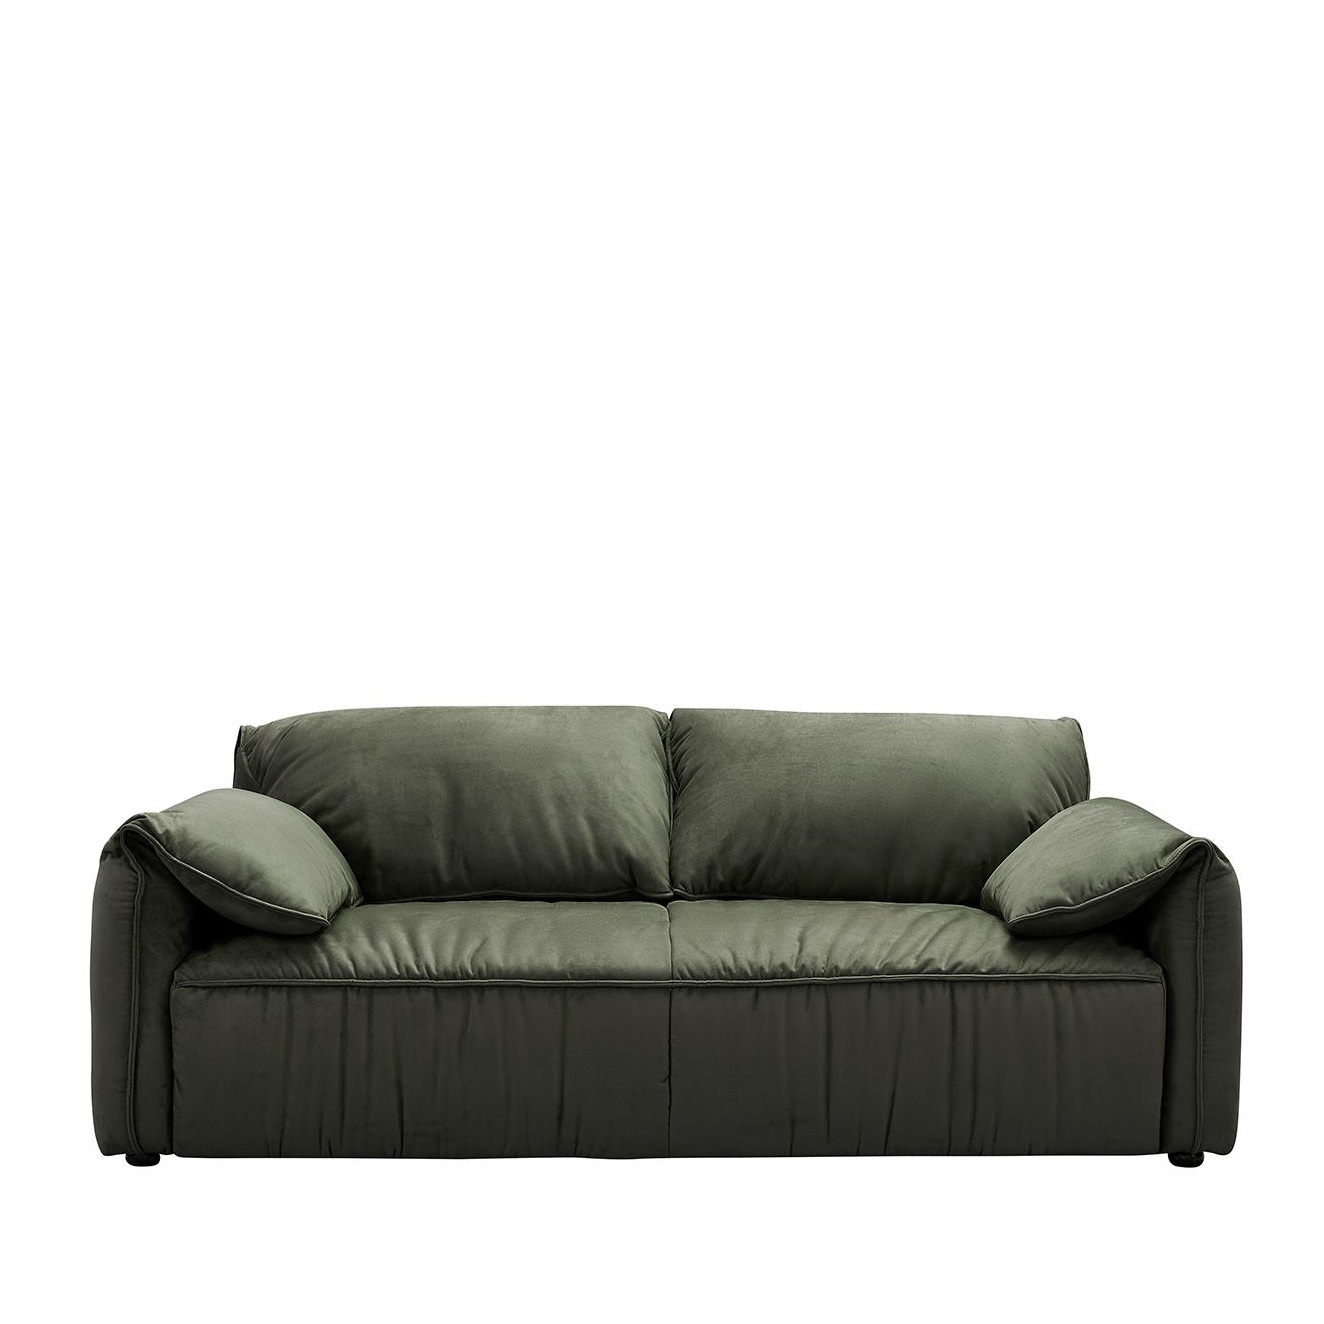 Зеленый диван и шкаф в ромбах